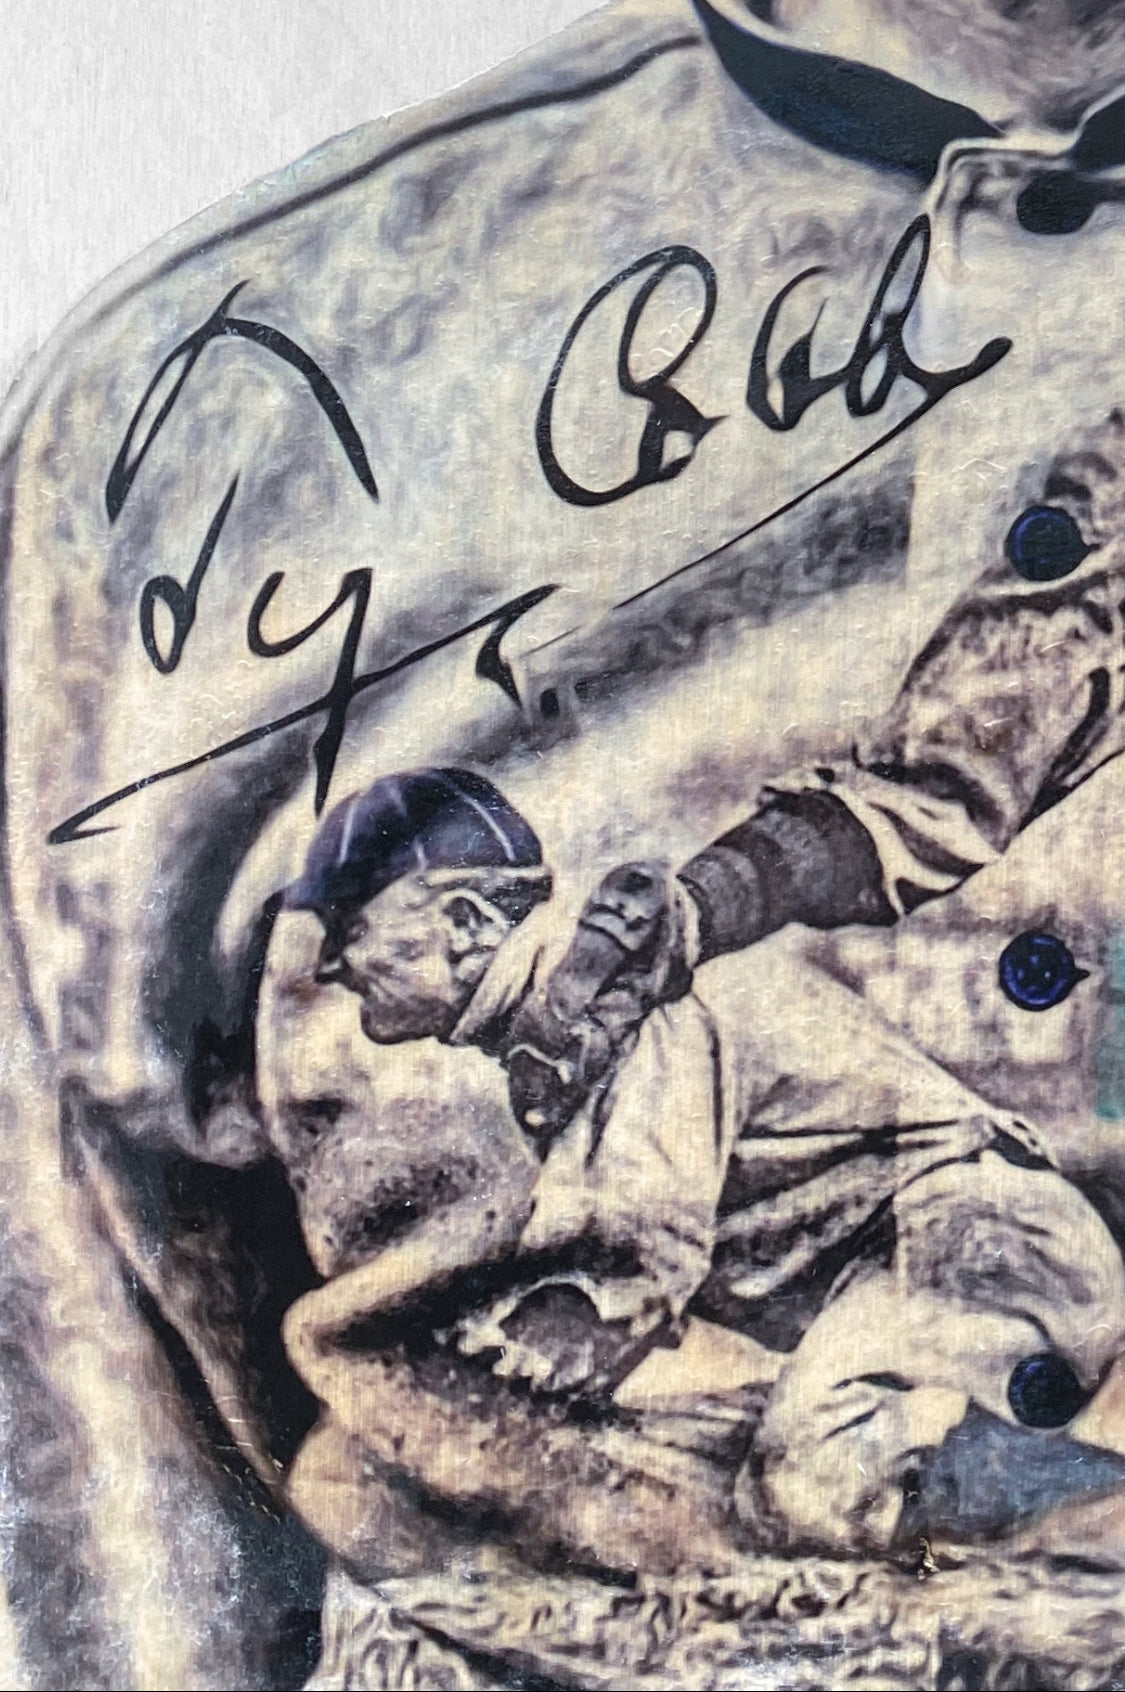 "The Georgia Peach" (Ty Cobb) Detroit Tigers - SPECIAL EDITION (hidden art on backside) - 1/1 Original on Birchwood